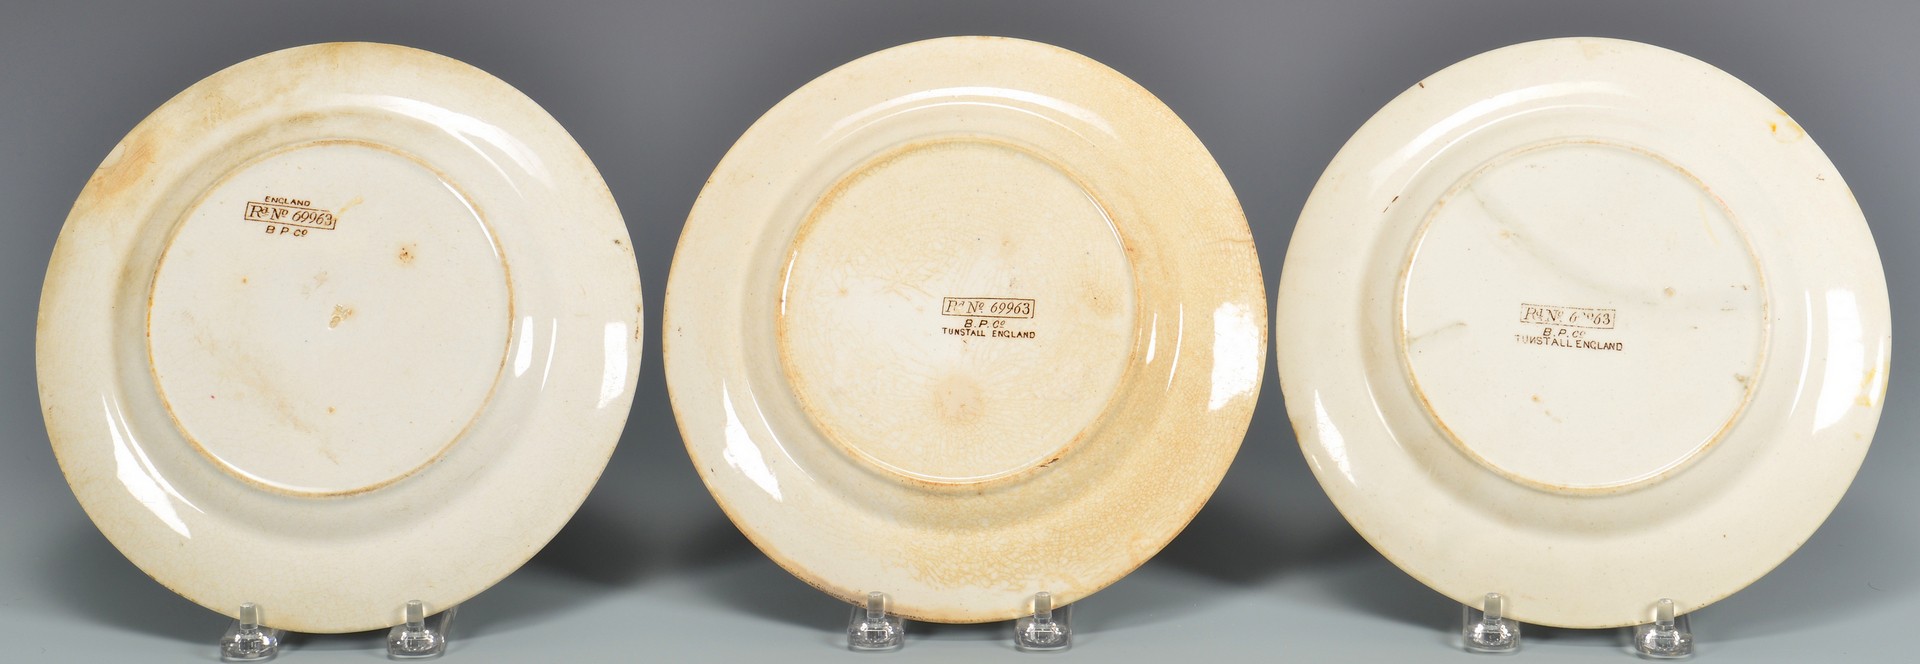 Lot 608: Group of 23 English ABC Pottery Plates